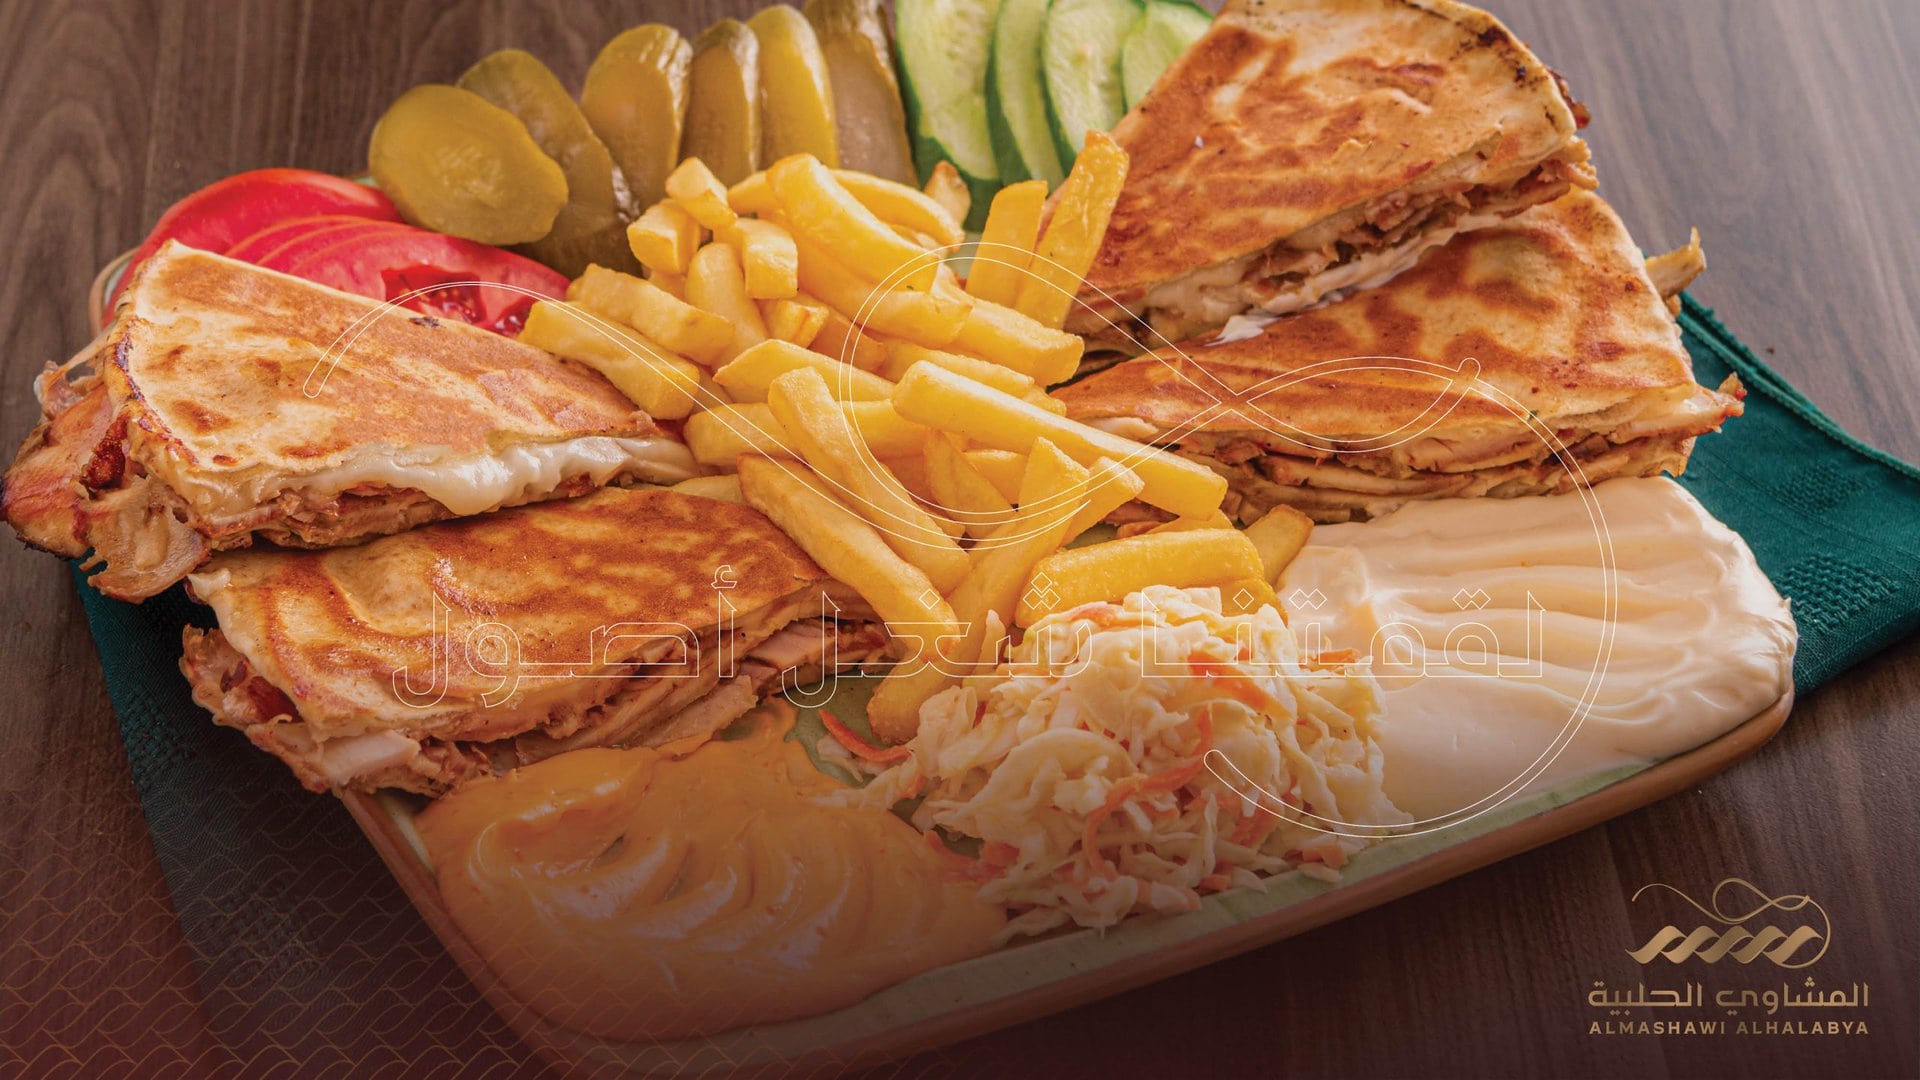 Relish the Delicious Shawarma at Favorable Prices: Best Shawarma Restaurant in Dubai